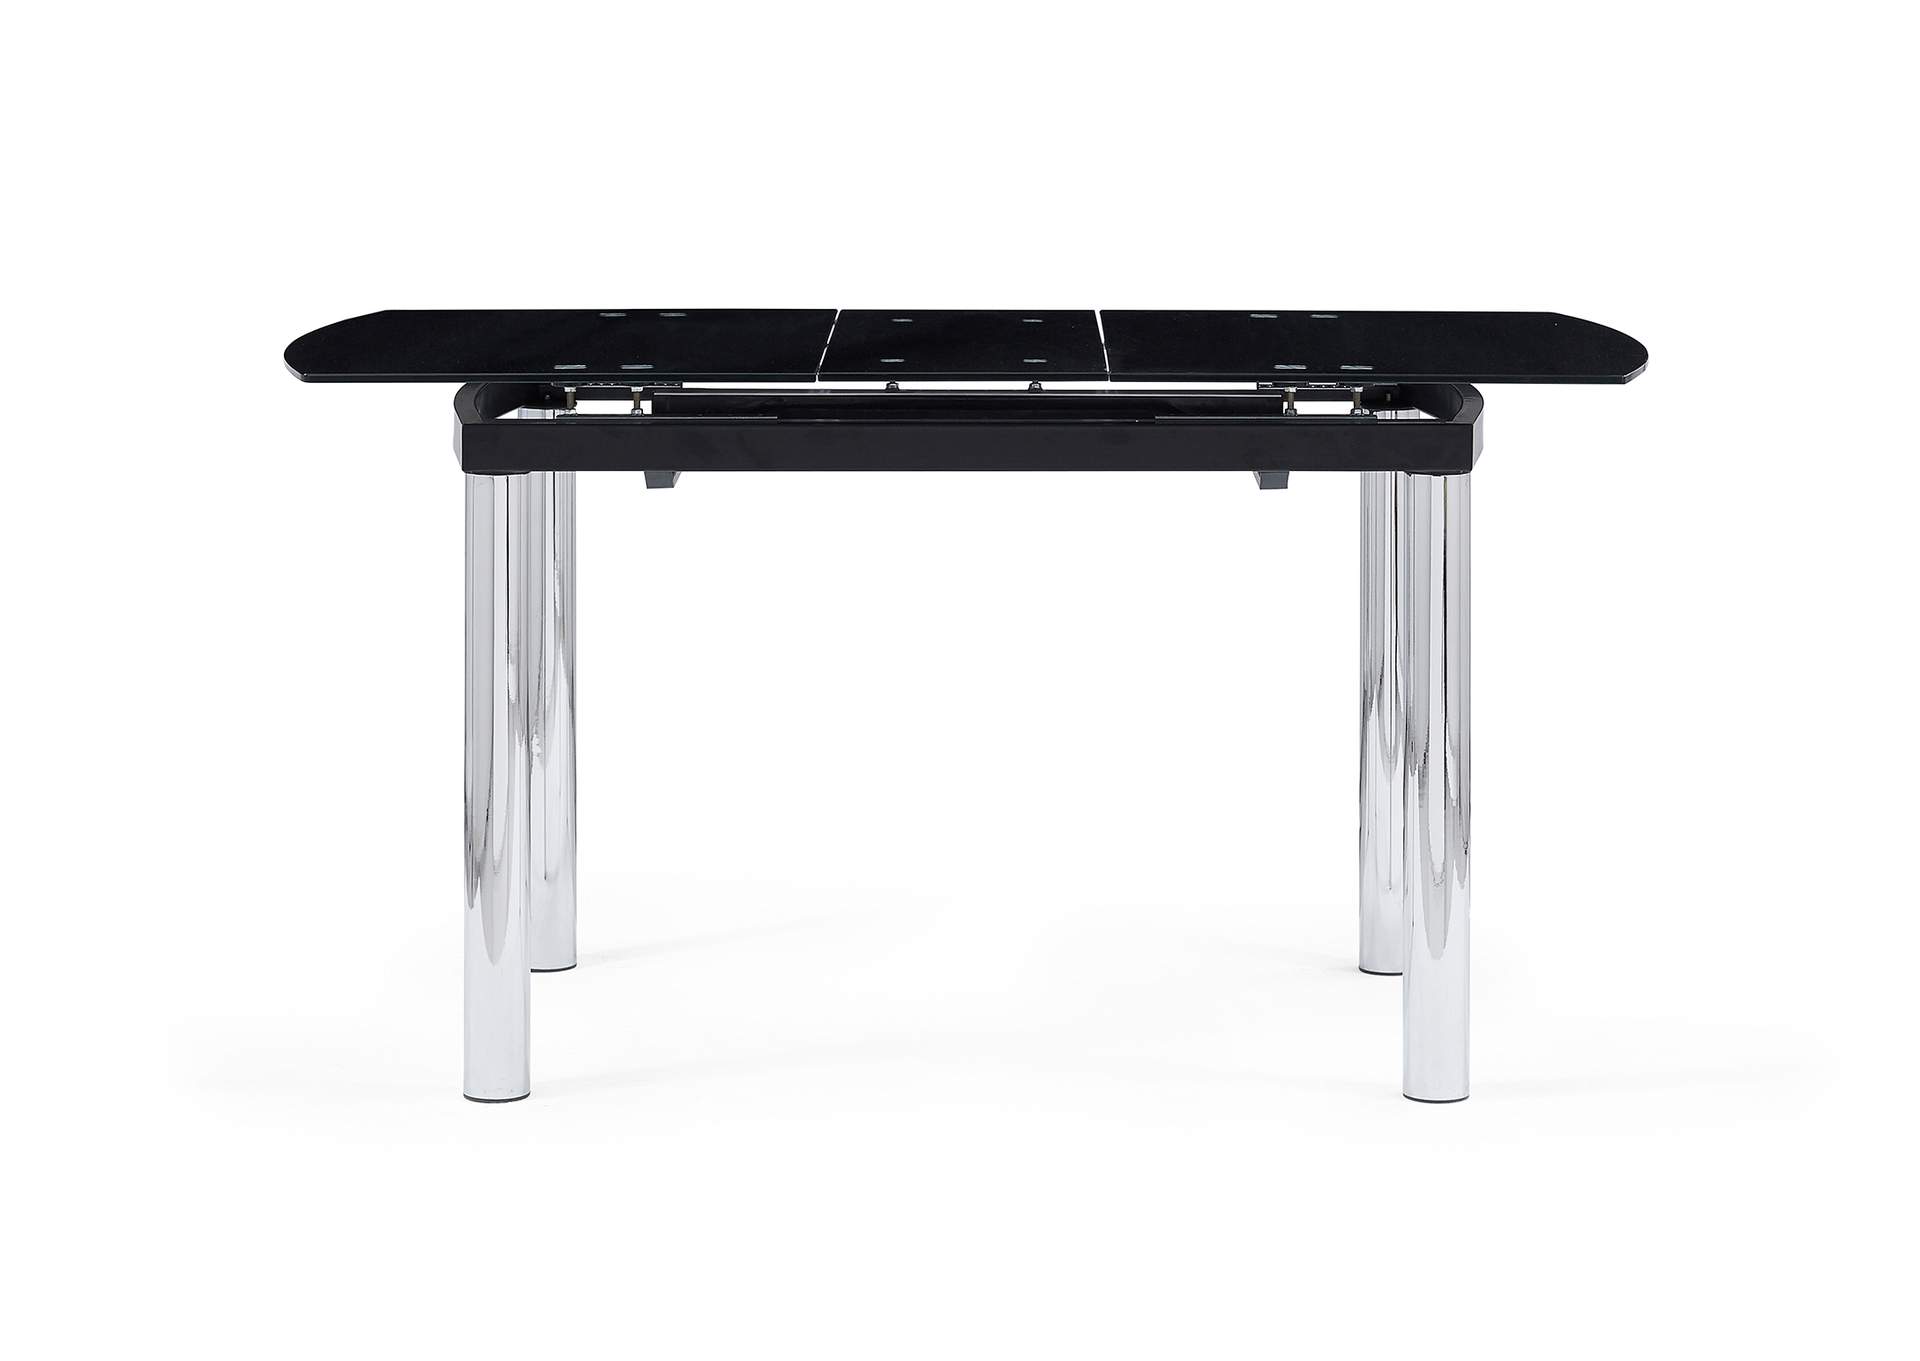 Black DINING TABLE,Global Furniture USA